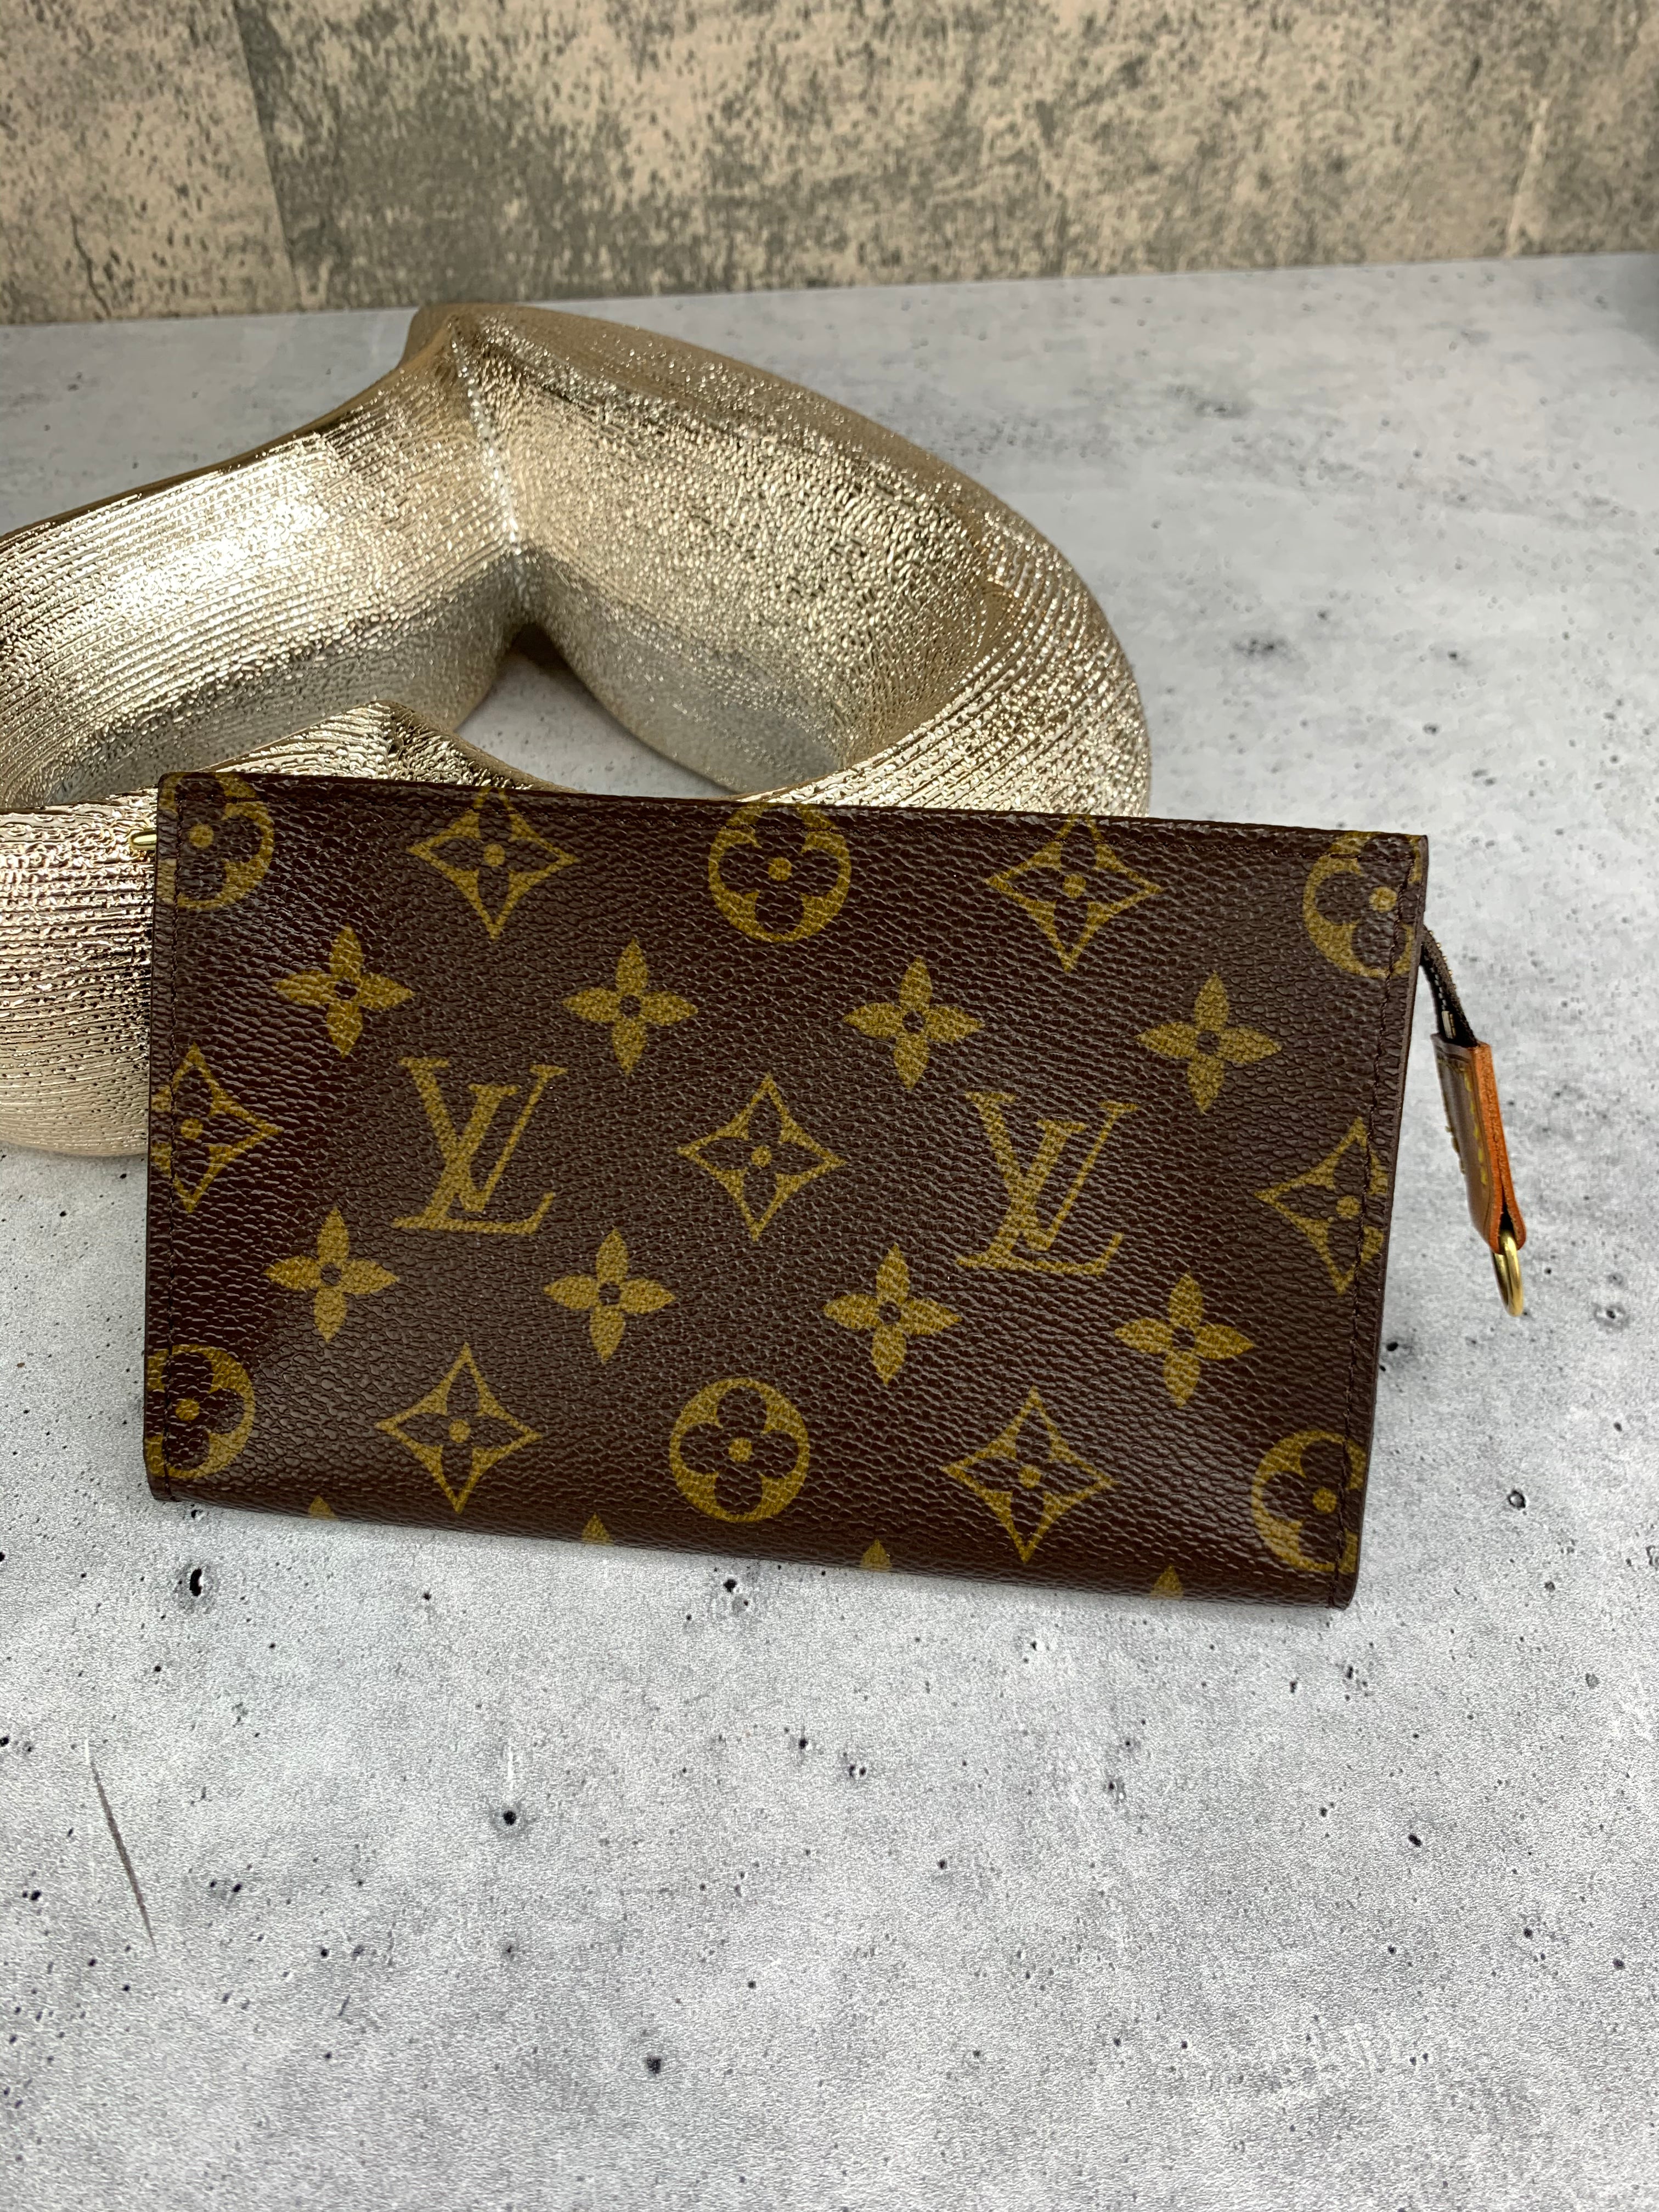 Louis Vuitton Trocadéro Clutch Travel Bag